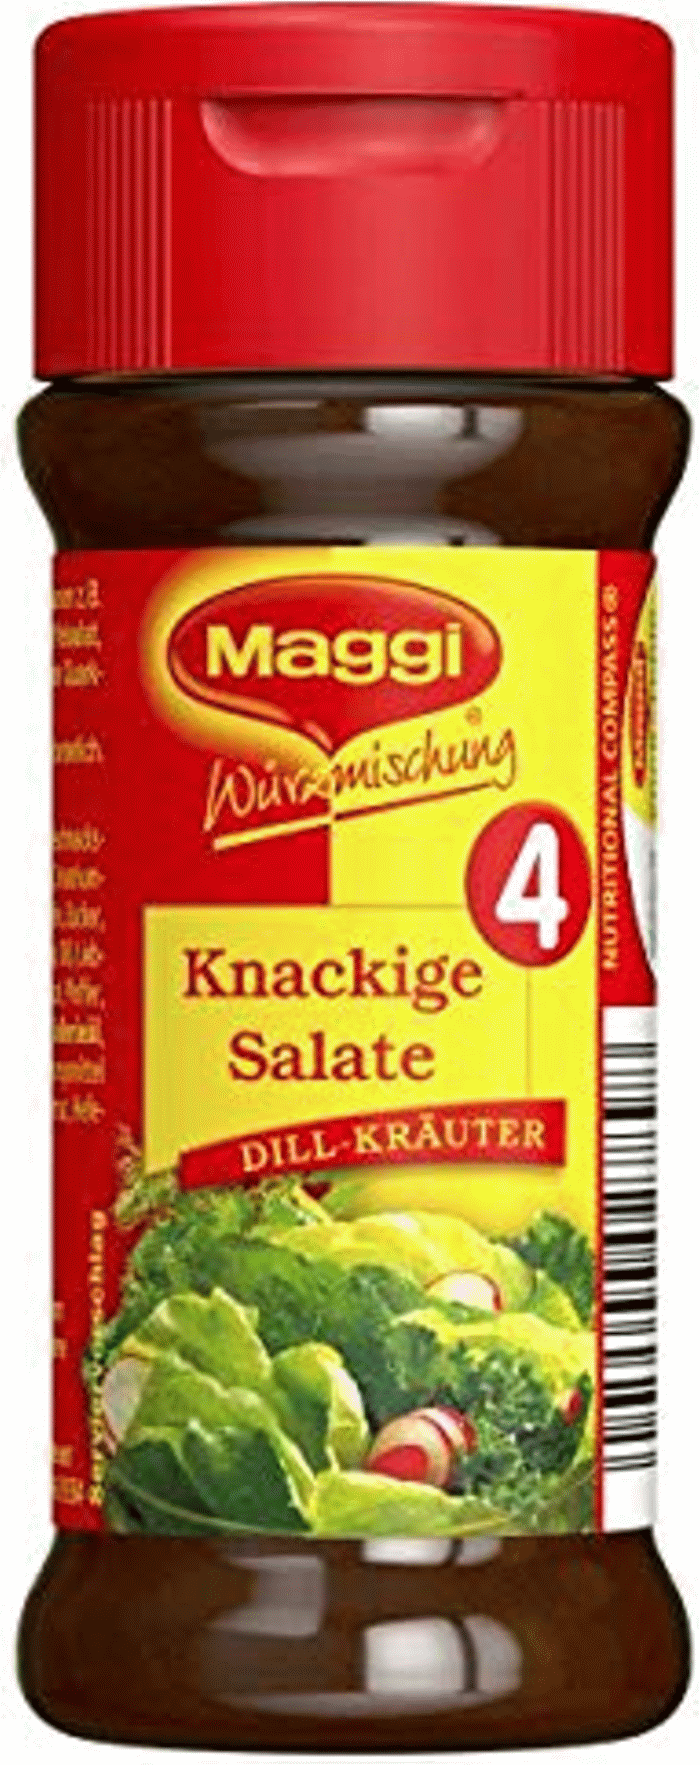 Maggi Würzmischung Nr.4 für knackige Salate 60g